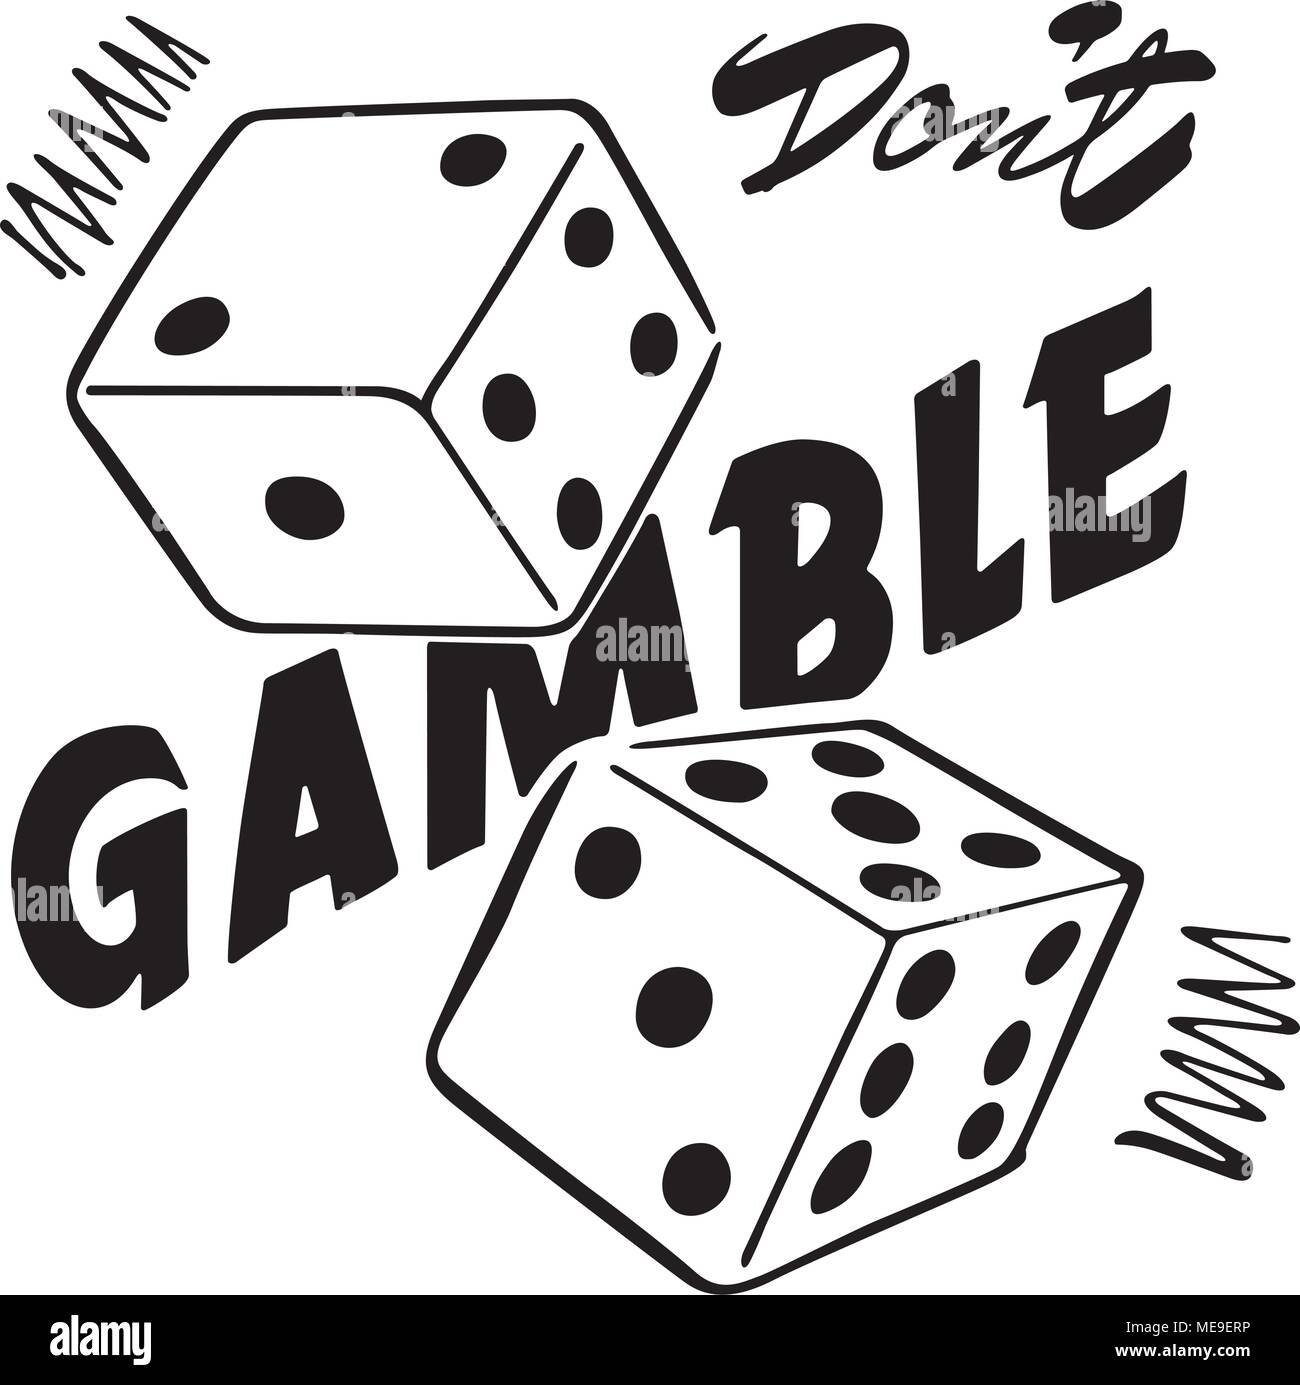 Don't Gamble - Retro Ad Art Banner Stock Vector